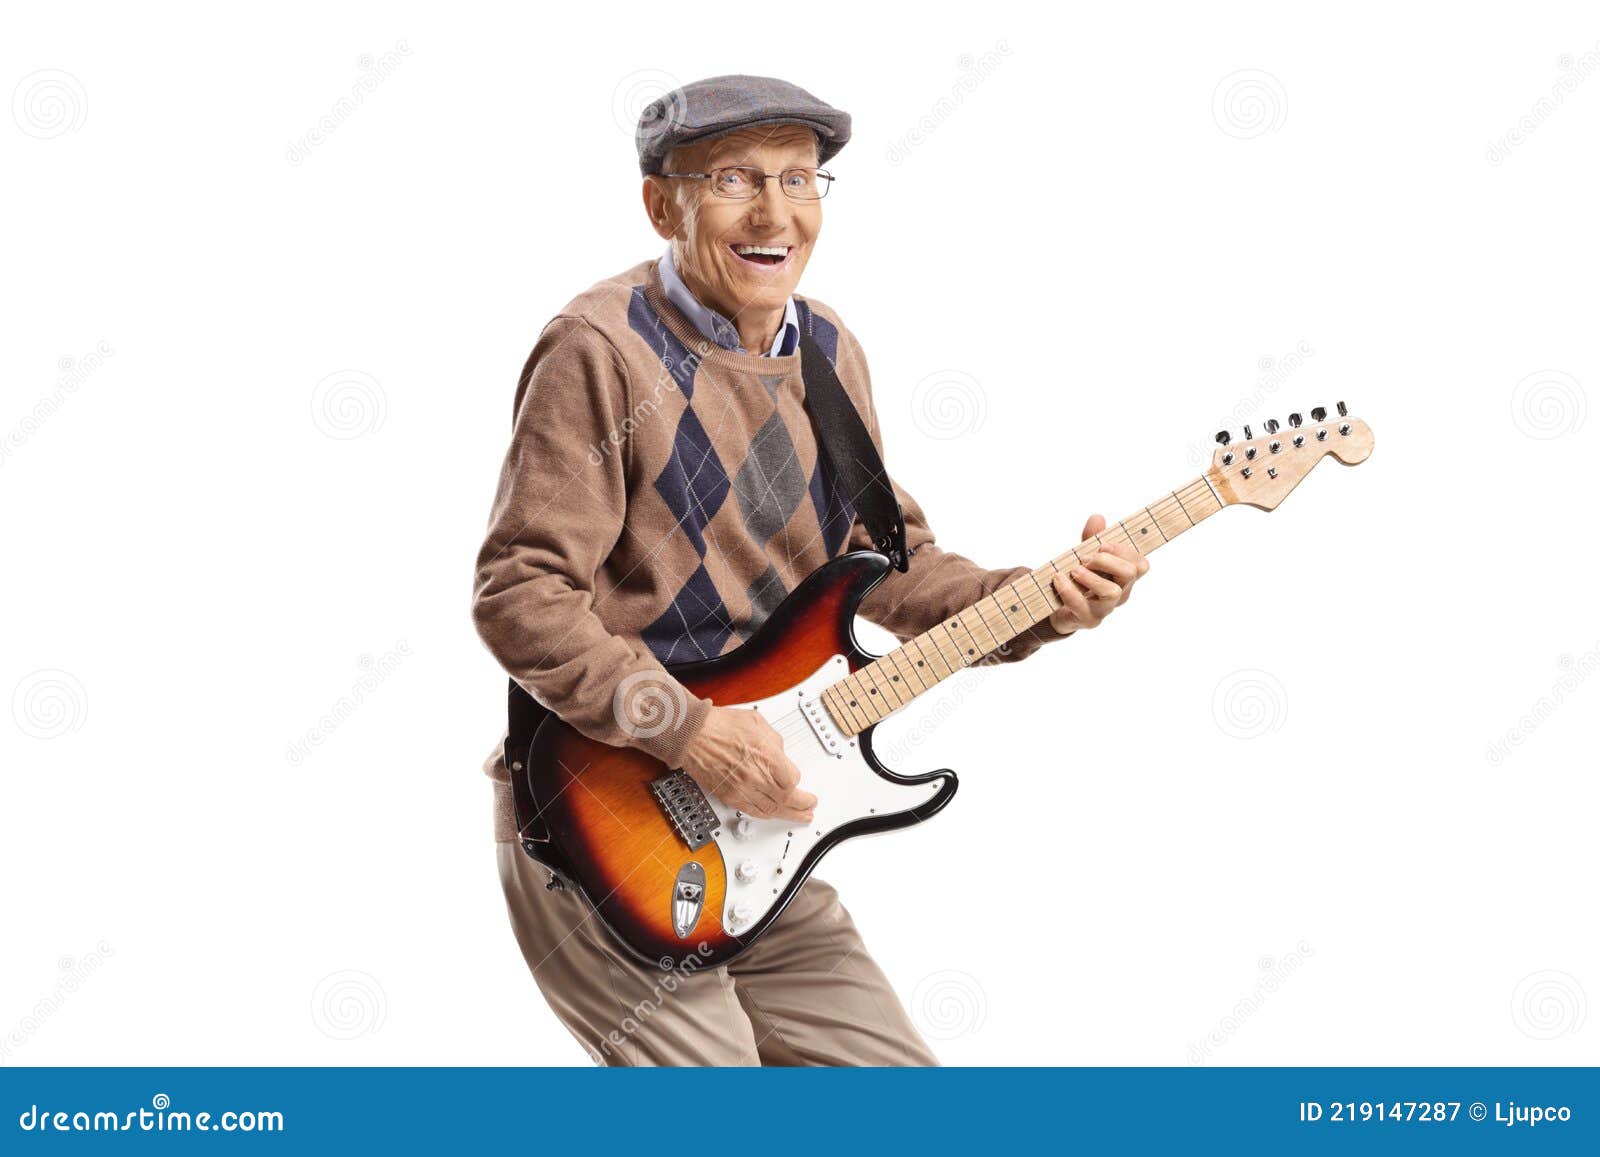 grandpa-playing-electric-guitar-jumping-isolated-white-background-grandpa-playing-electric-guitar-jumping-219147287.jpg